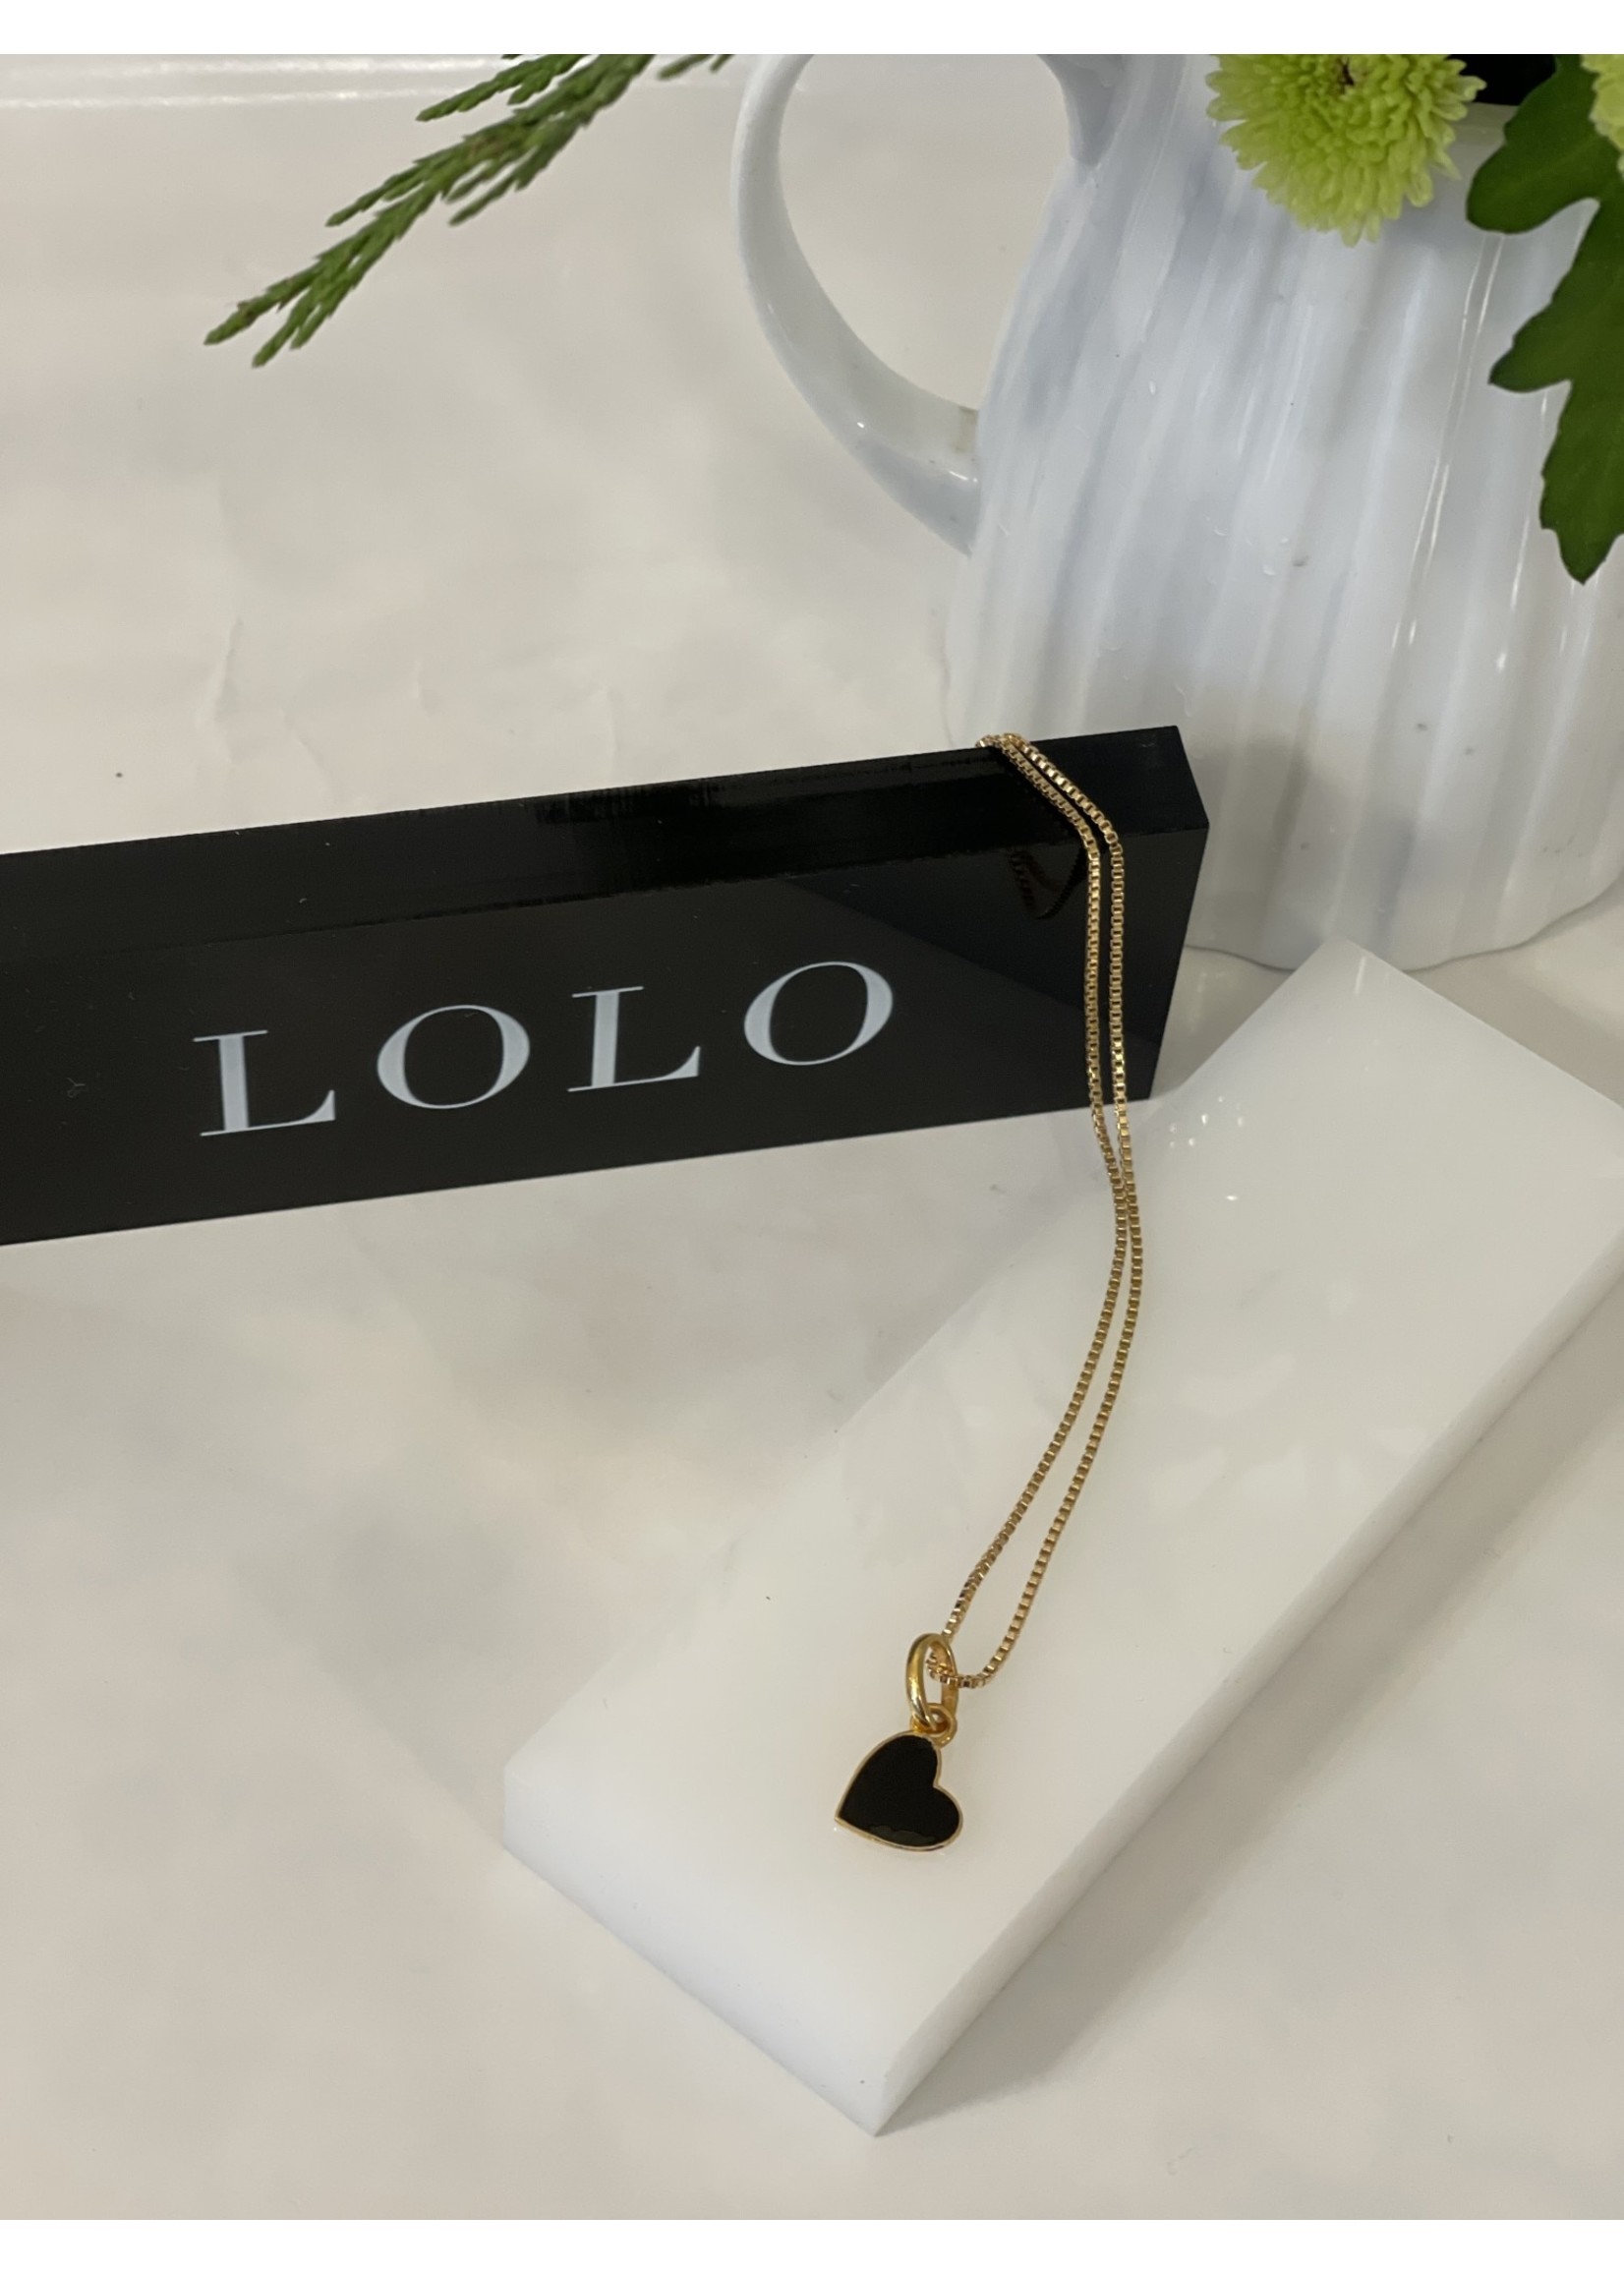 Lolo LOLO Heart Necklace Black- 18 inch